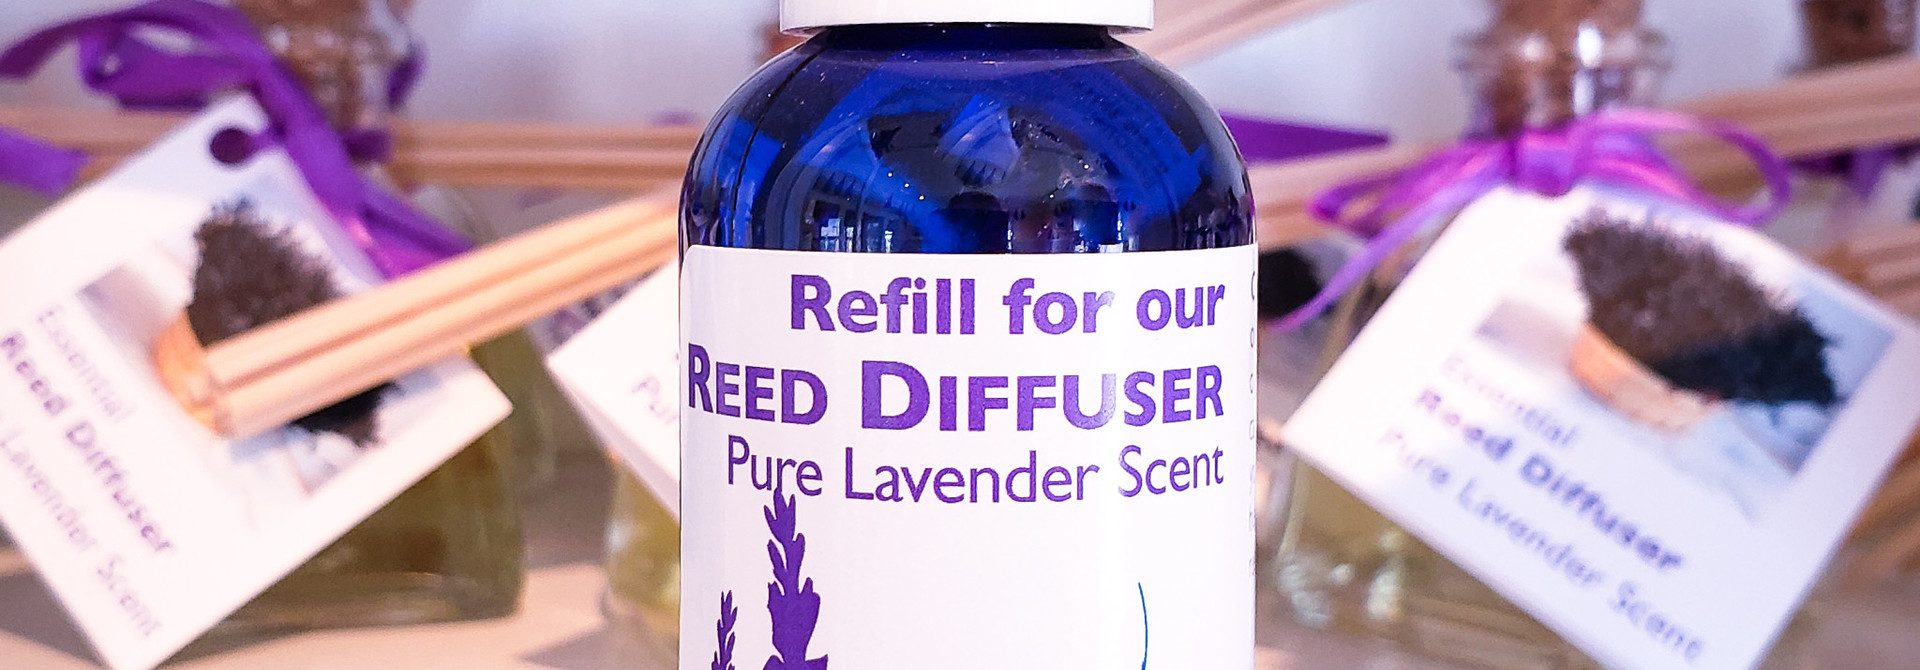 Essential Reed Diffuser - 2 oz REFILL Pure Lavender